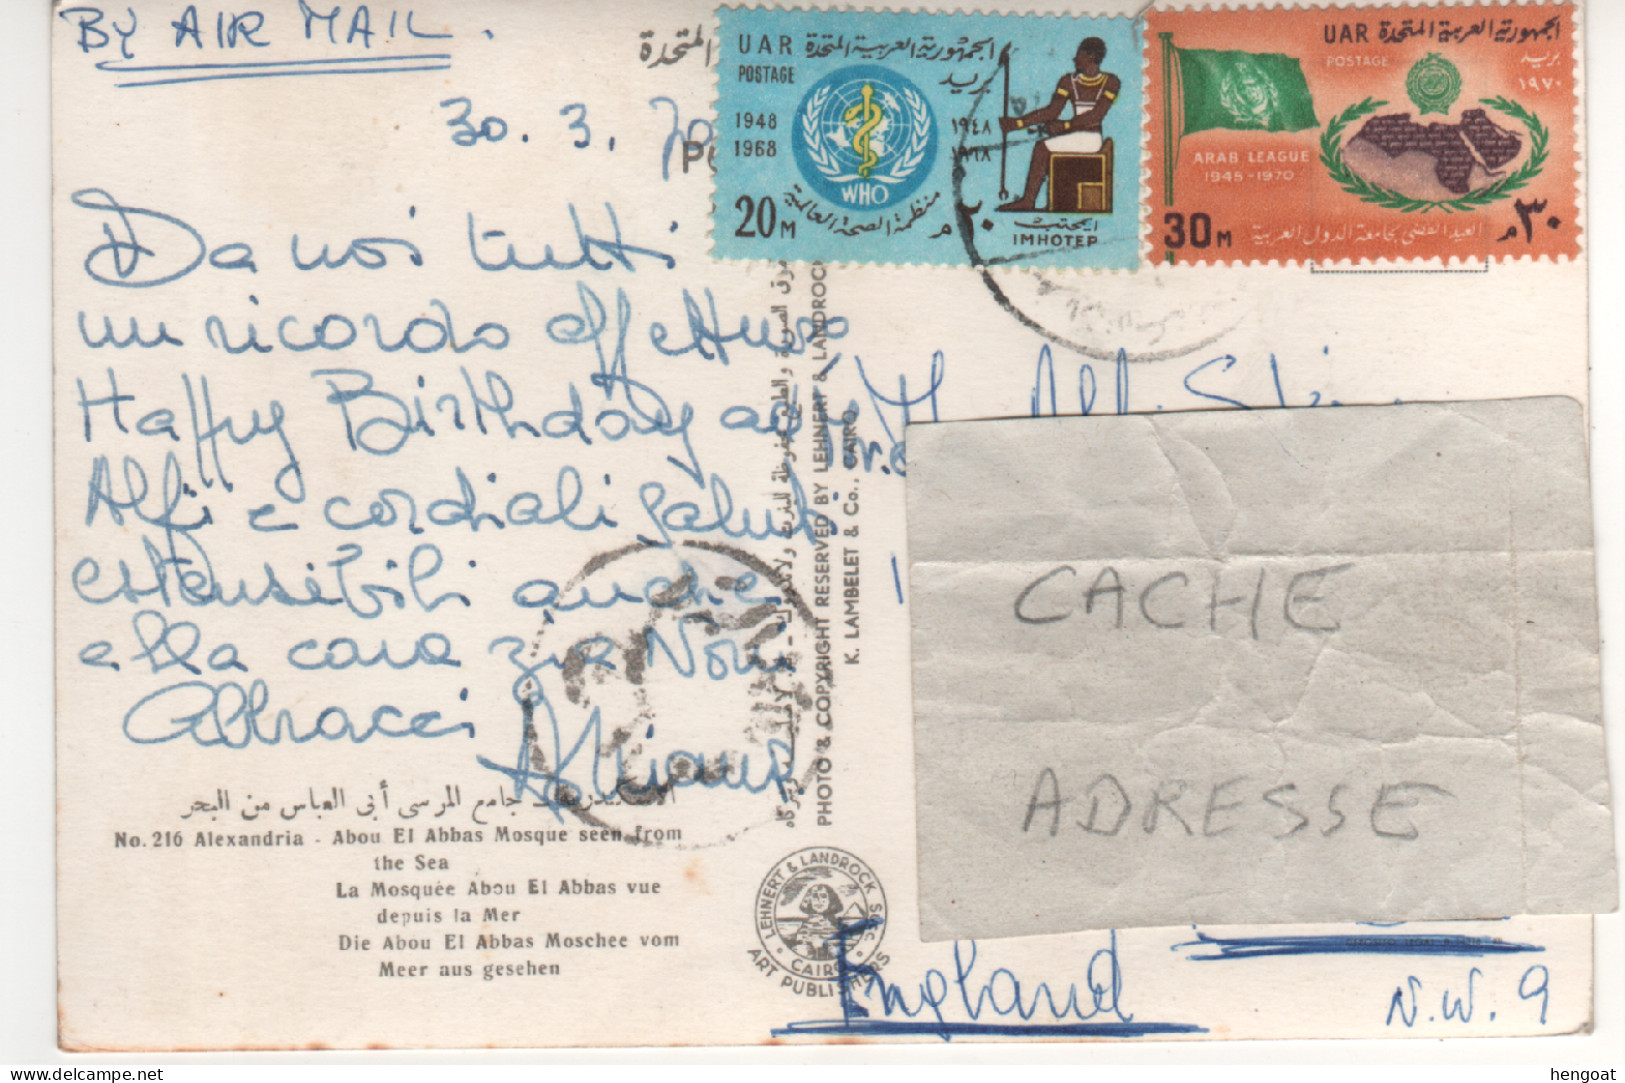 Timbres , Stamps " 1948 -1968 WHO , Imhotep ; 1945 - 1970 Ligue Arabe " Sur CP , Carte , Postcard Du 30/03/70 - Brieven En Documenten